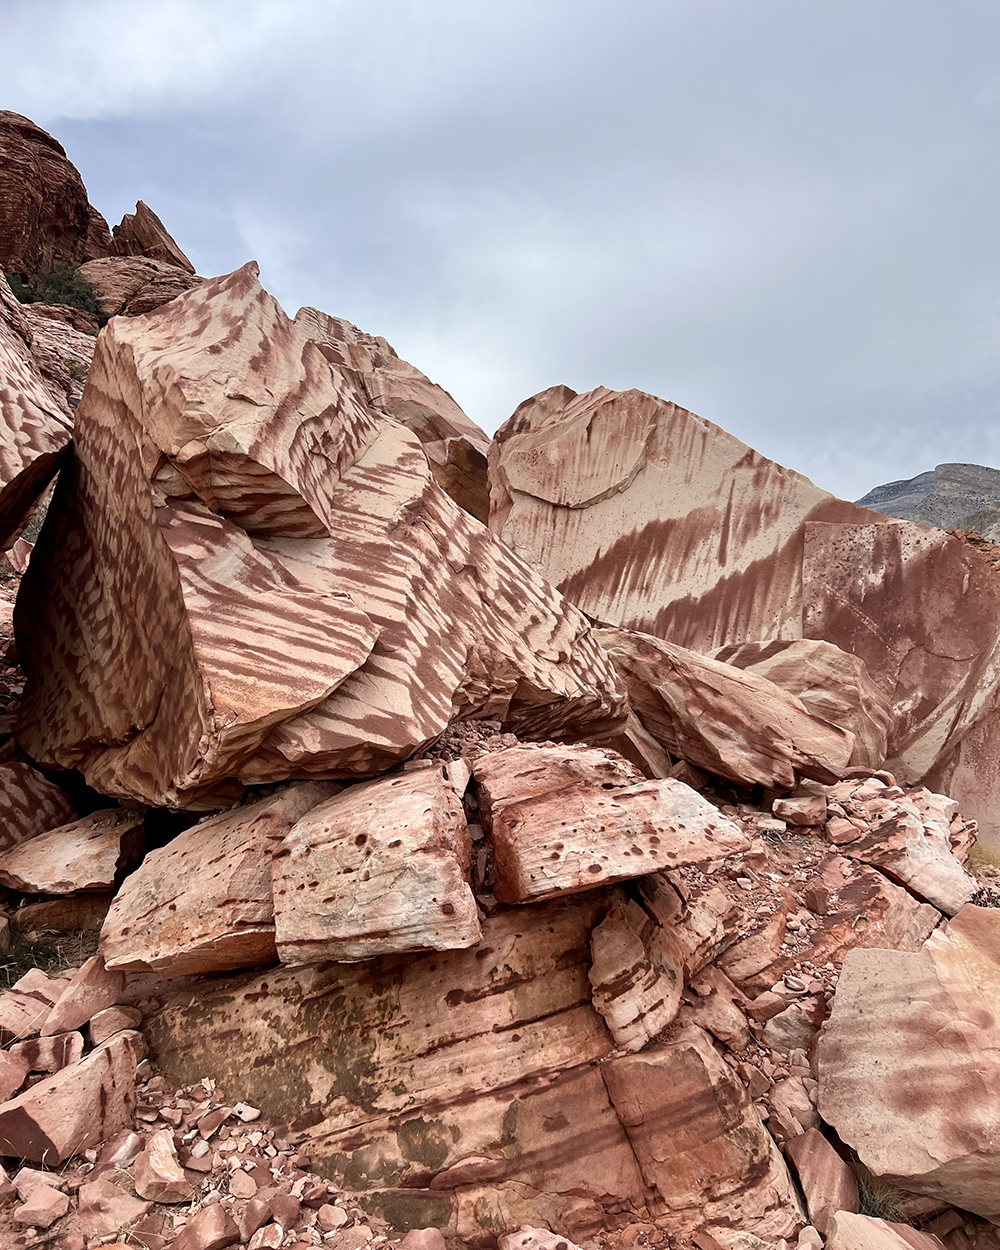  Stunning rock patterns near Cirque du Soleil V3 in Red Spring Boulders.  